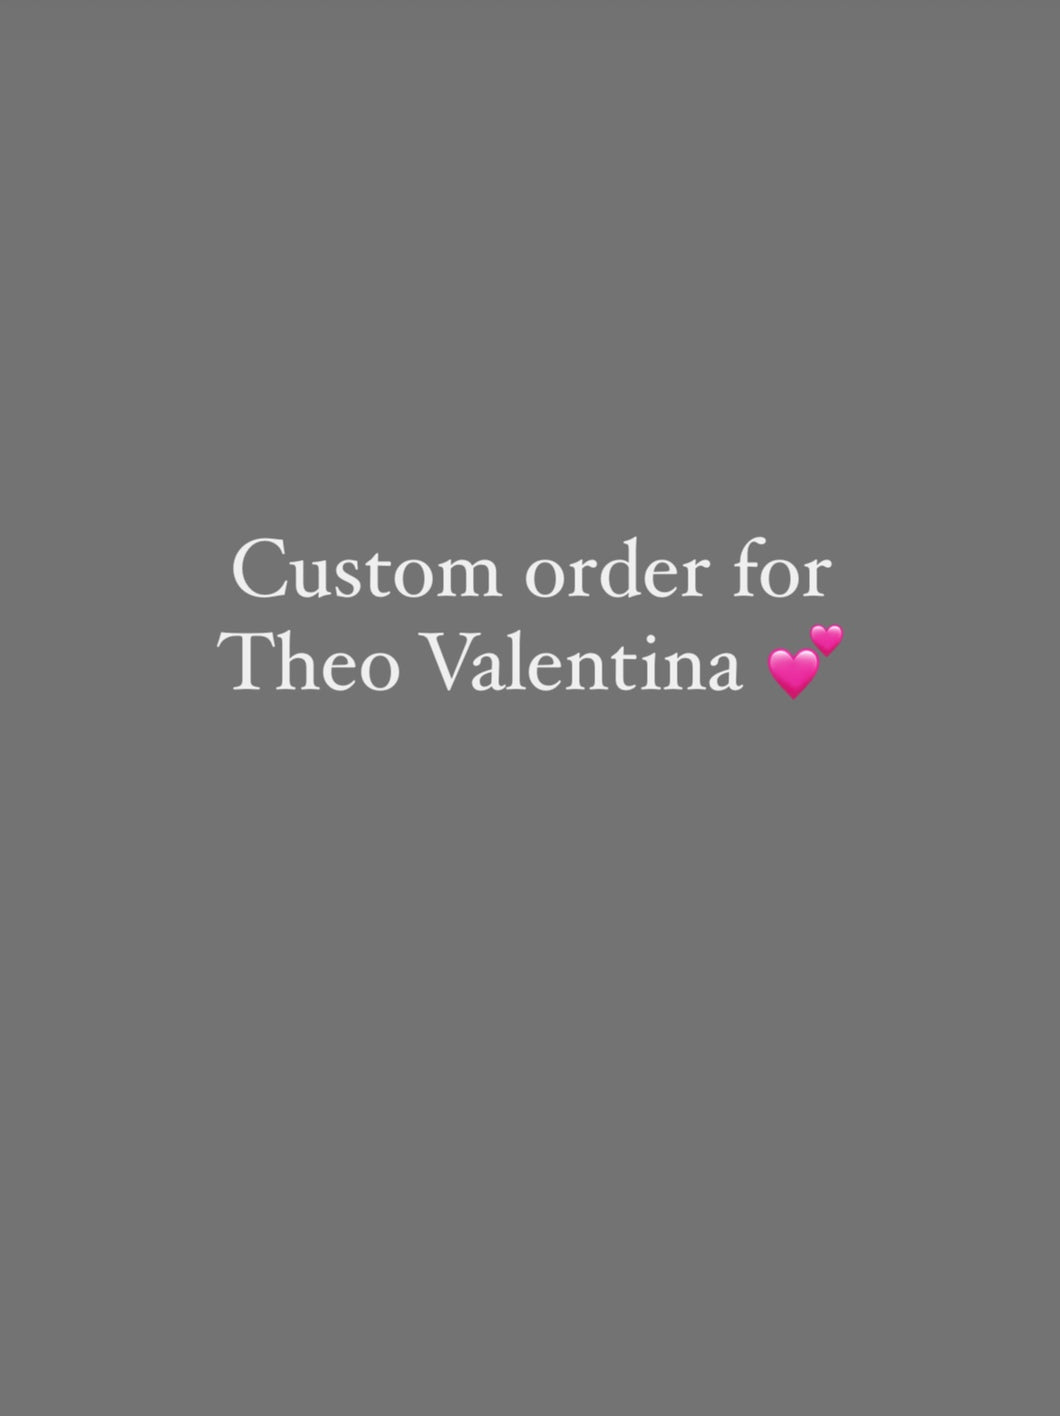 Custom order for Theo valentina